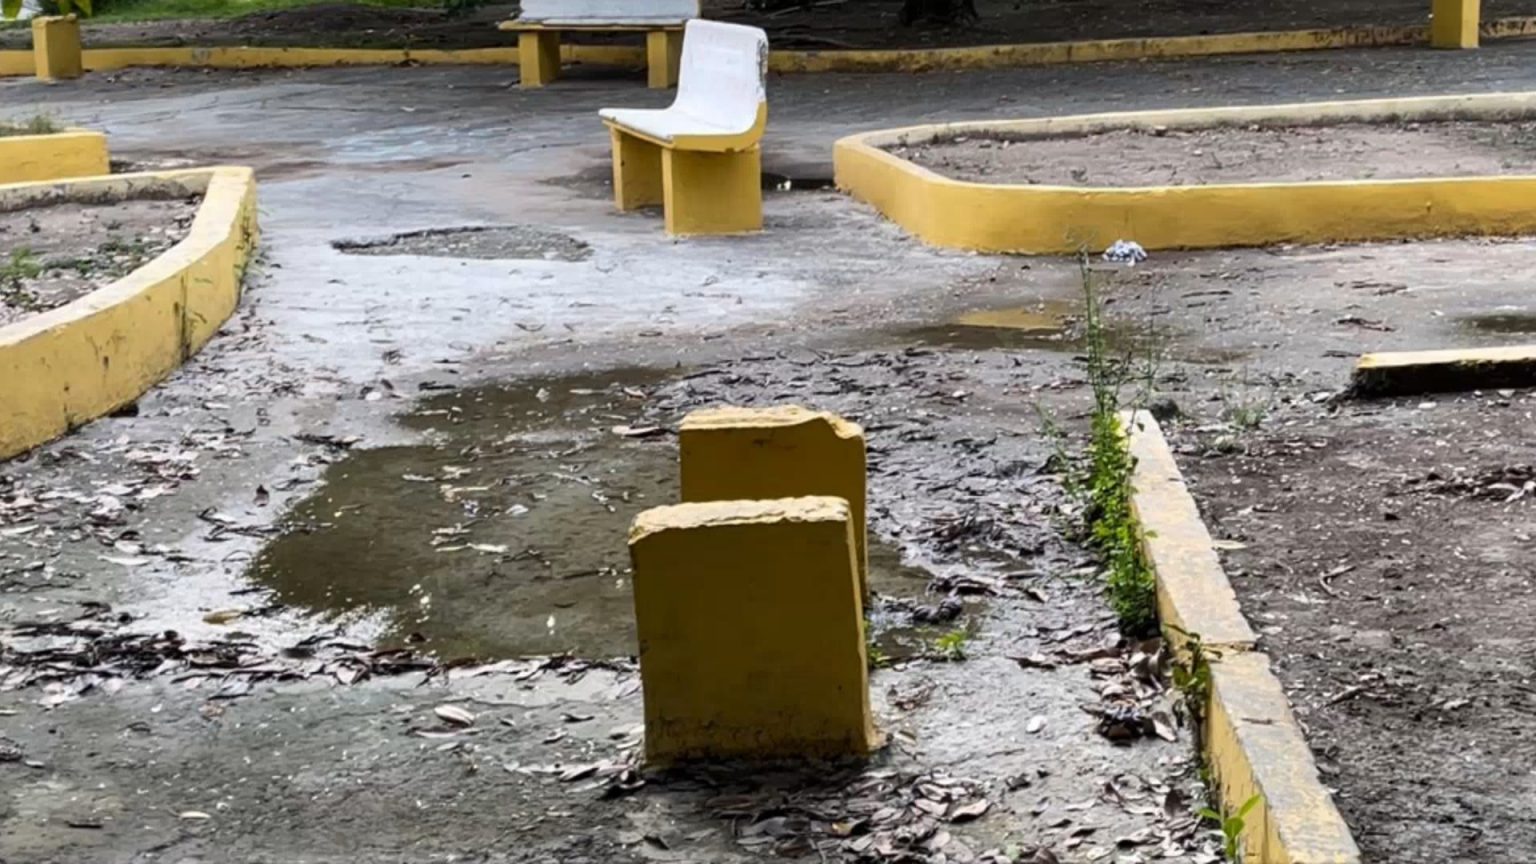 VIDEO: Alcalde de Sabana Yegua llama observar condiciones en que encontró ese municipio